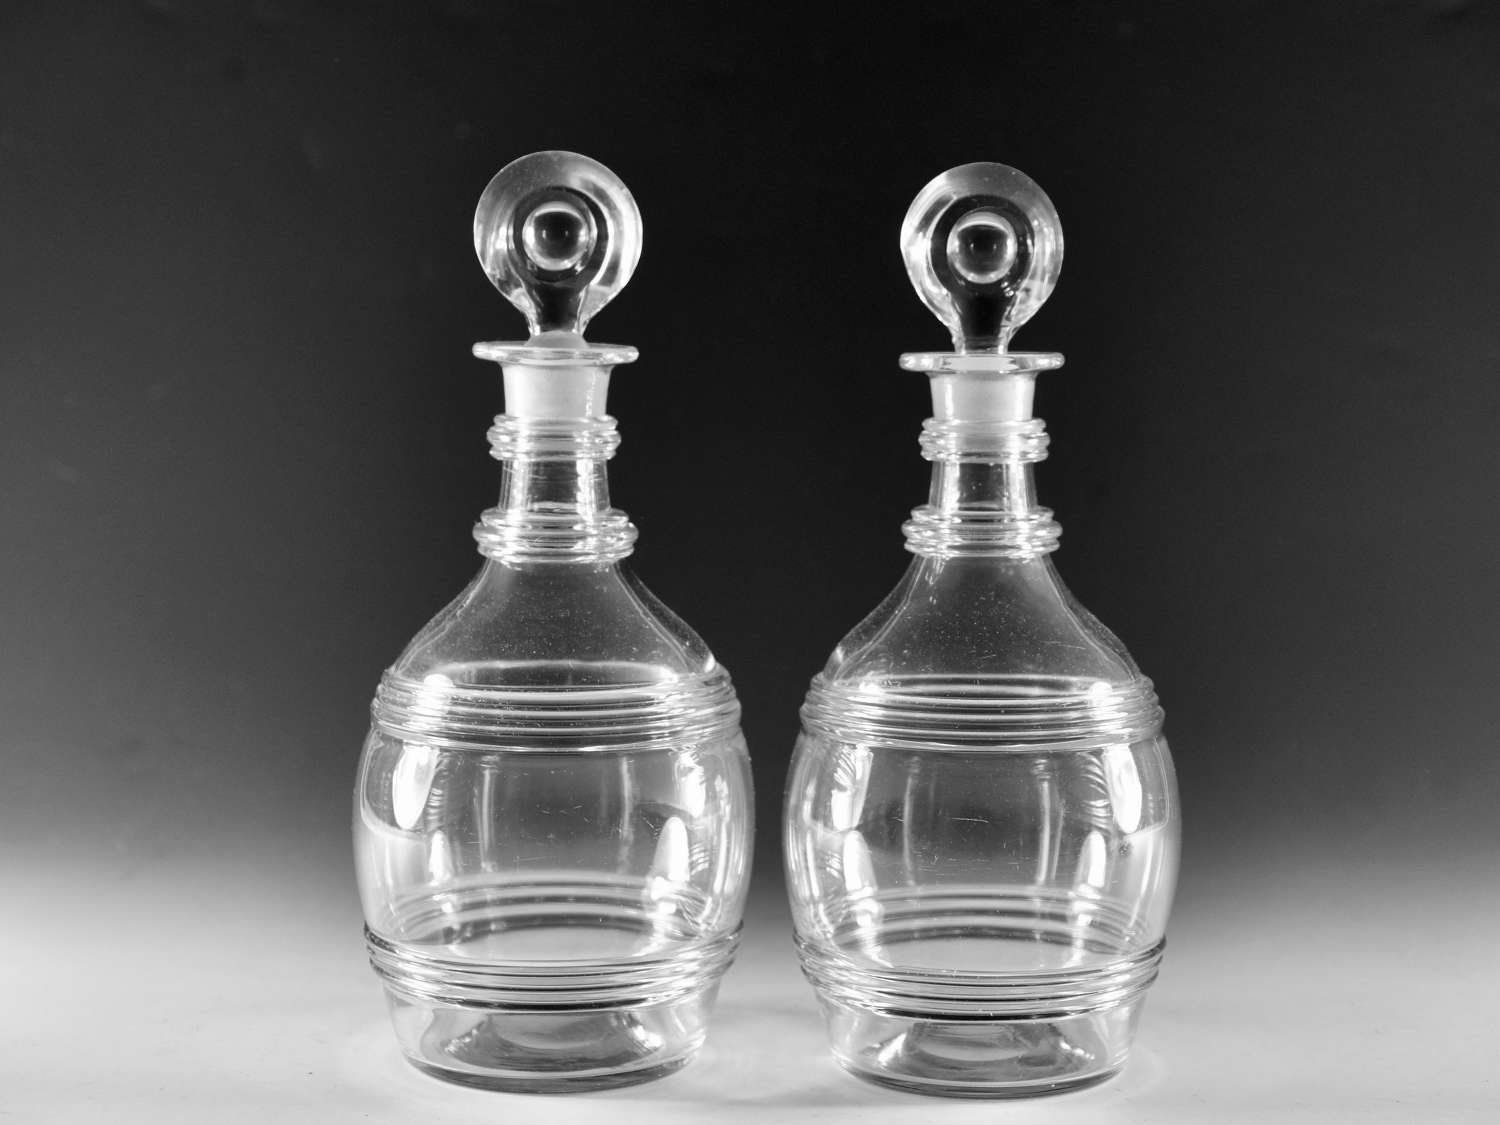 Antique glass decanters pair English c1810 - 20